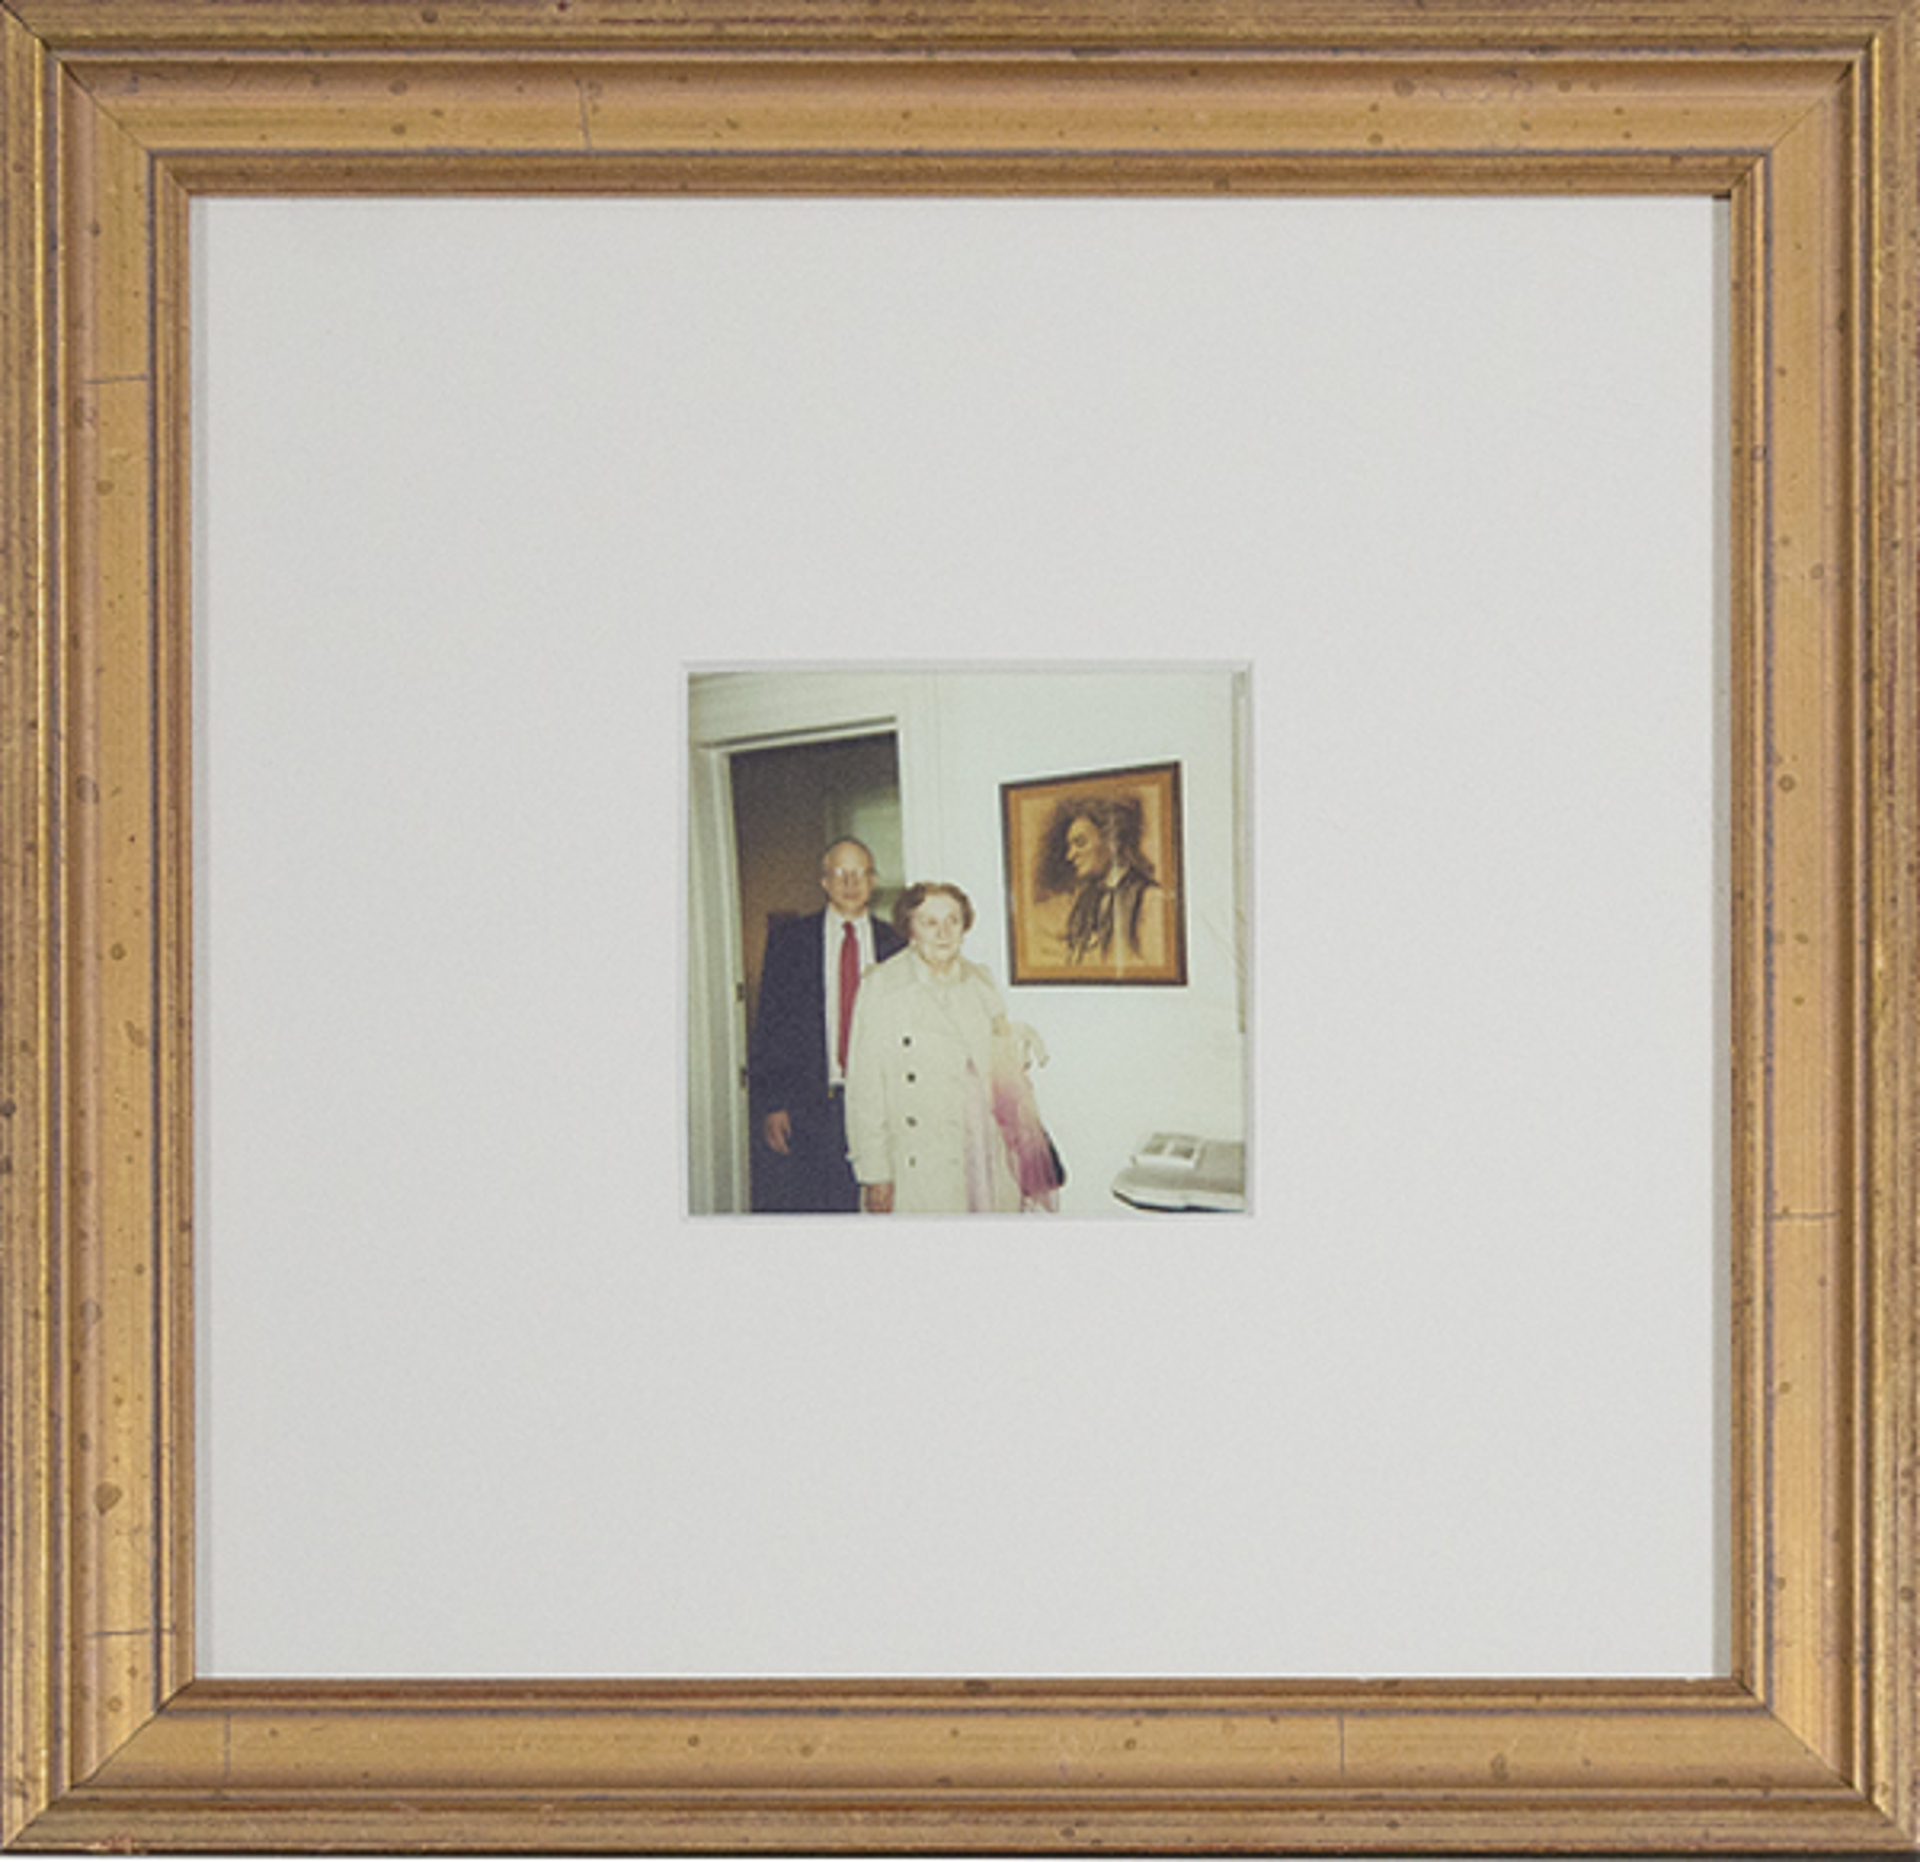 David Barnett & Sylvia Spicuzza by Francesco Spicuzza's Framed Self- Portrait during the F. Spicuzza exhibit at David Barnett Gallery by David Barnett